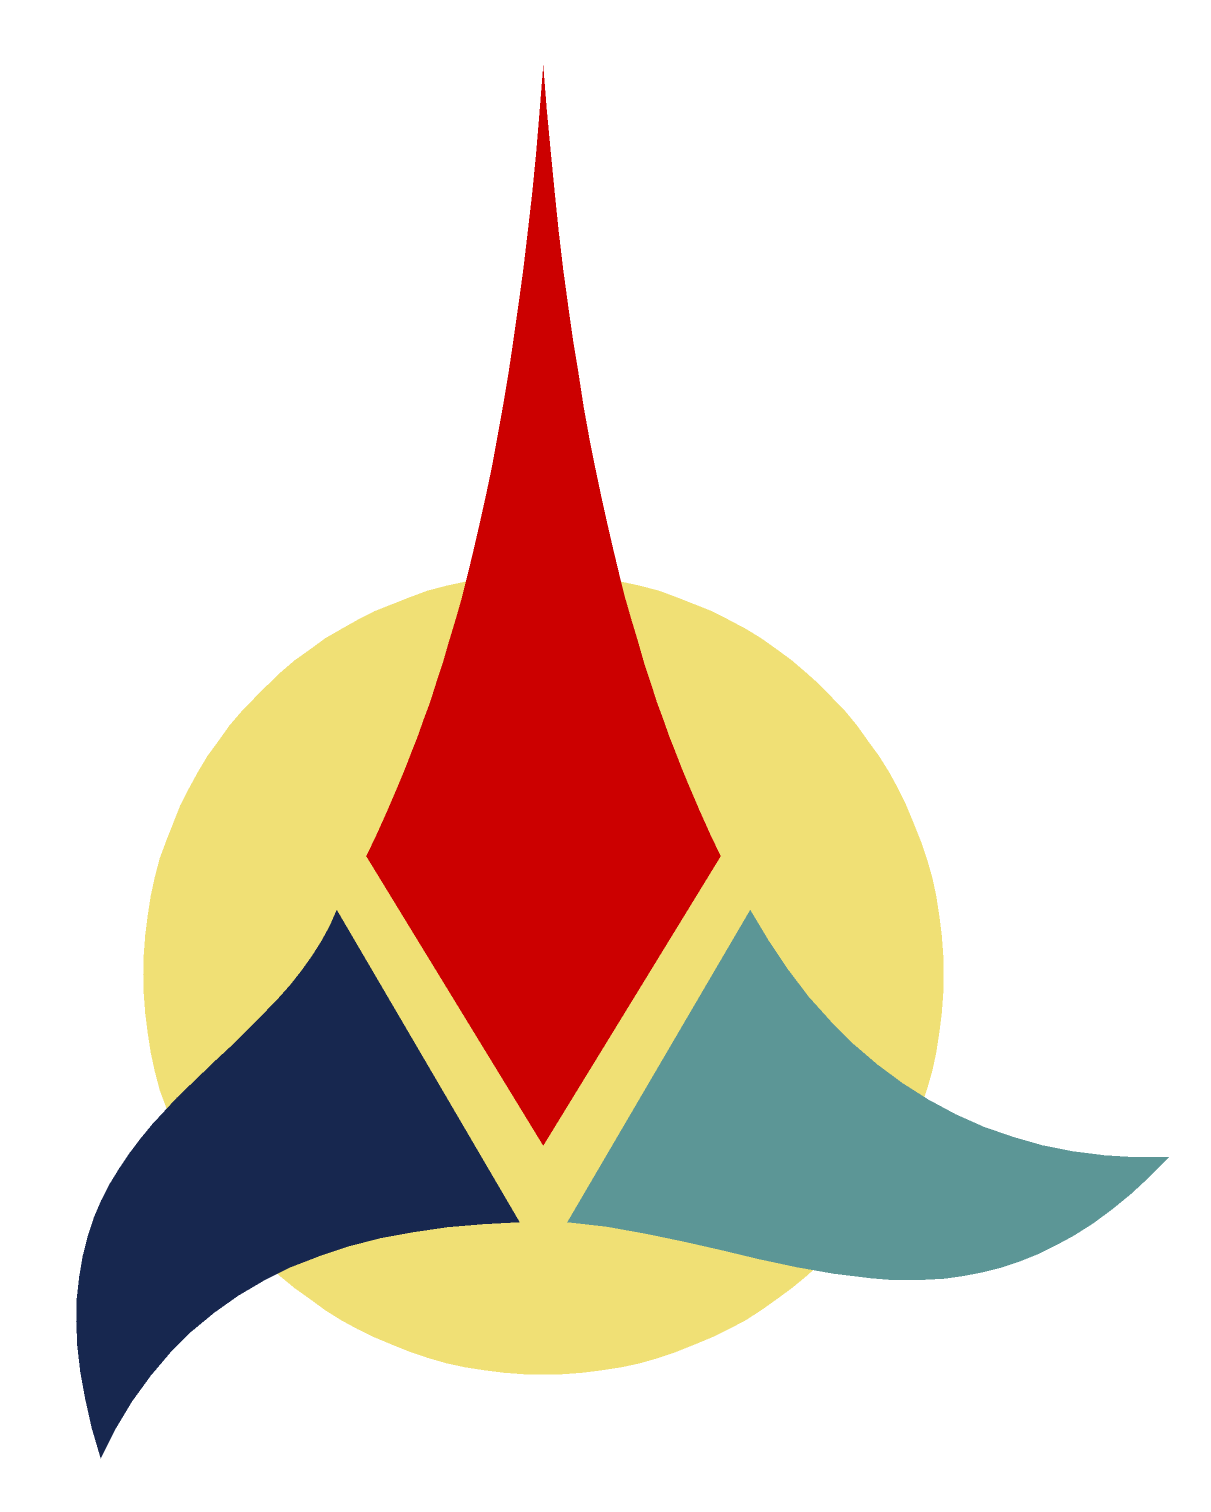 Klingon Logo - Ex Astris Scientia - Forgotten Alien Emblems